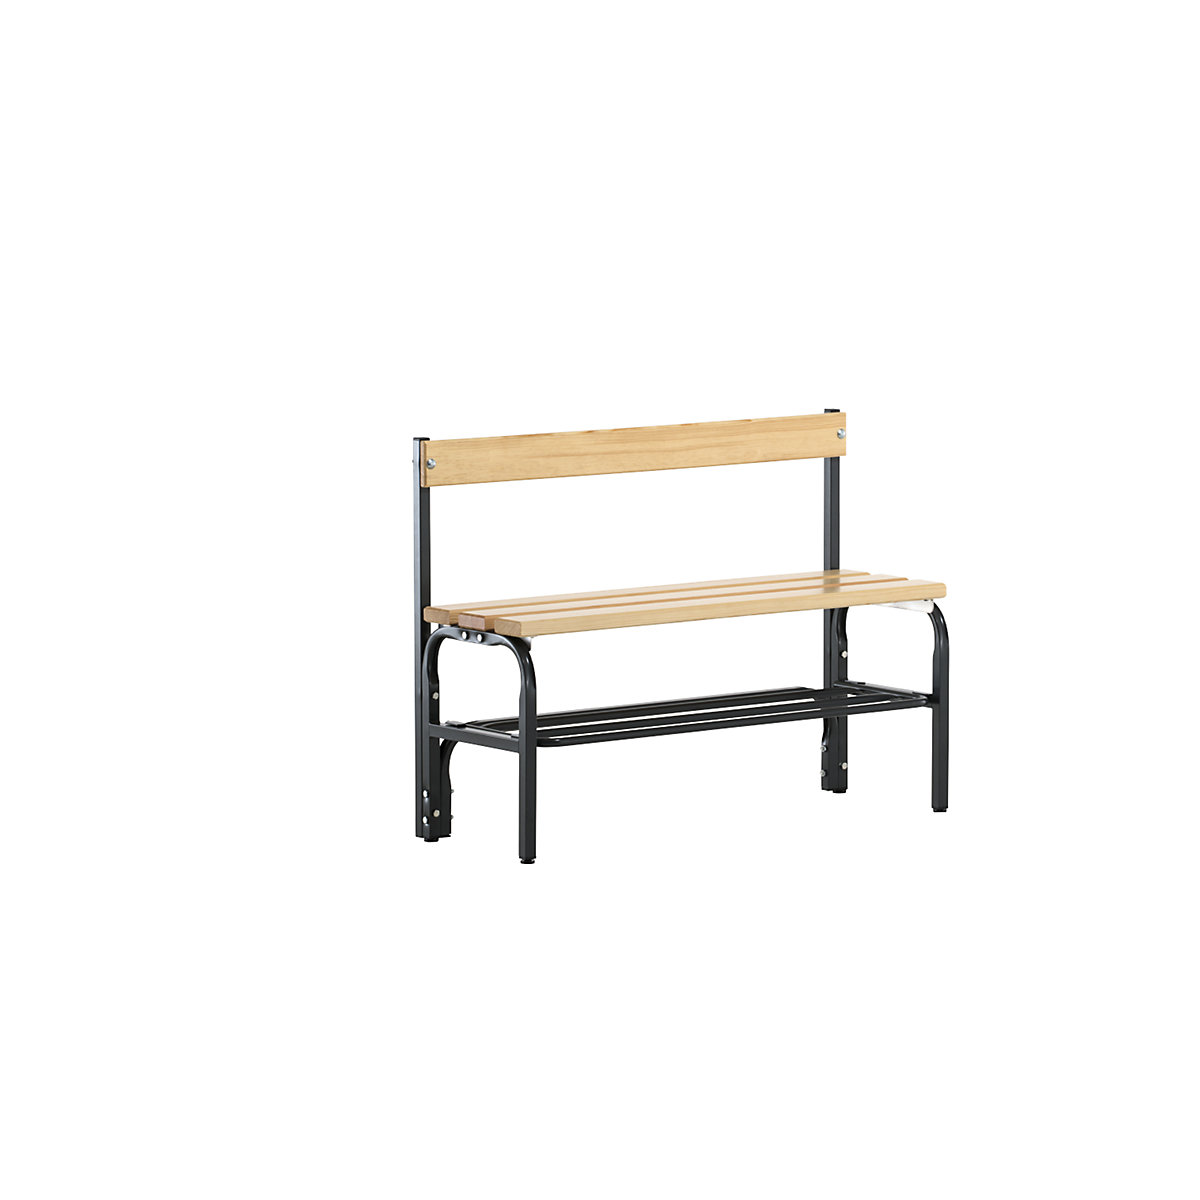 Šatňová lavica s polovičnou výškou s operadlom, jednostranná – Sypro, drevené lišty z borovice, dĺžka 1015 mm, antracitová, rošt na obuv-9